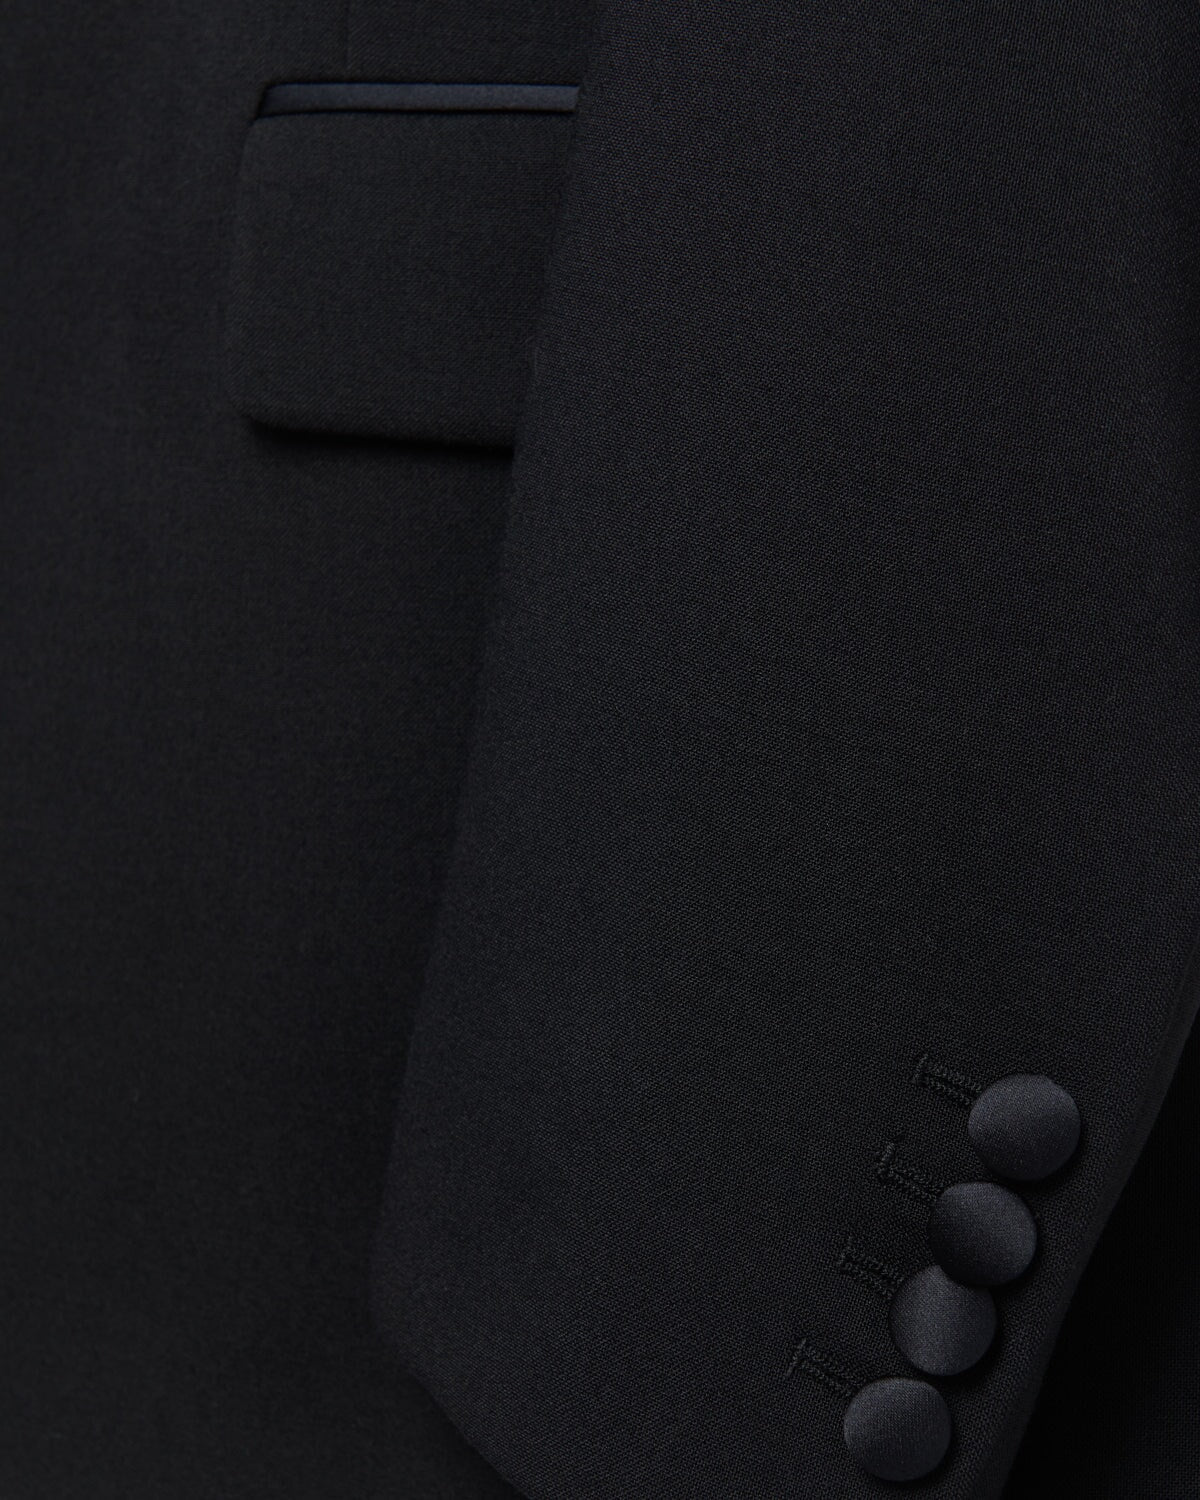 Kilgour Savile Row Tailoring SB1 KG Single Breasted Midnight Dinner Suit